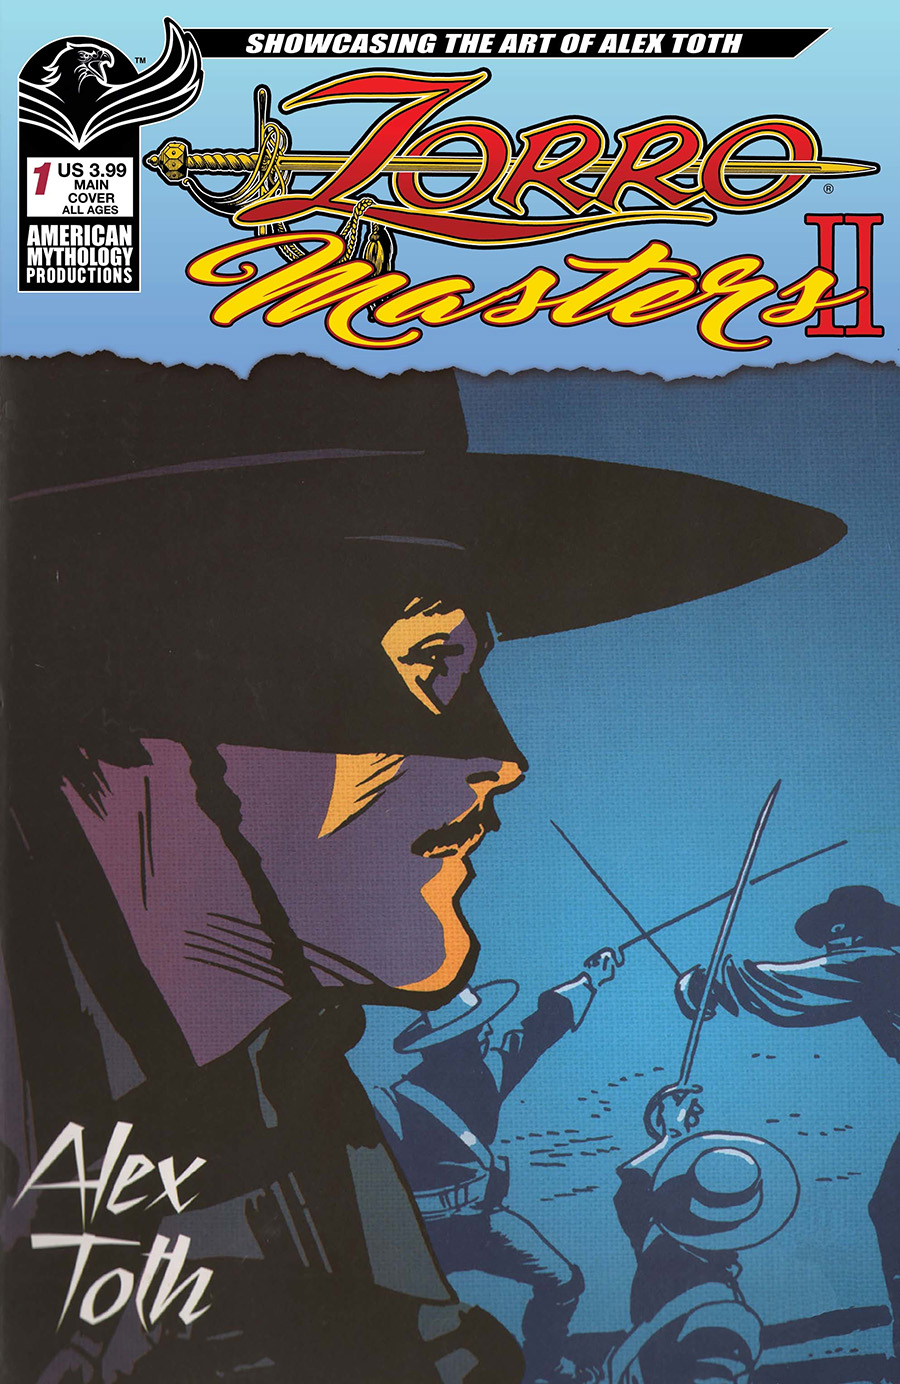 Zorro Masters Vol 2 Alex Toth #1 Cover A Regular Alex Toth Classic Cover